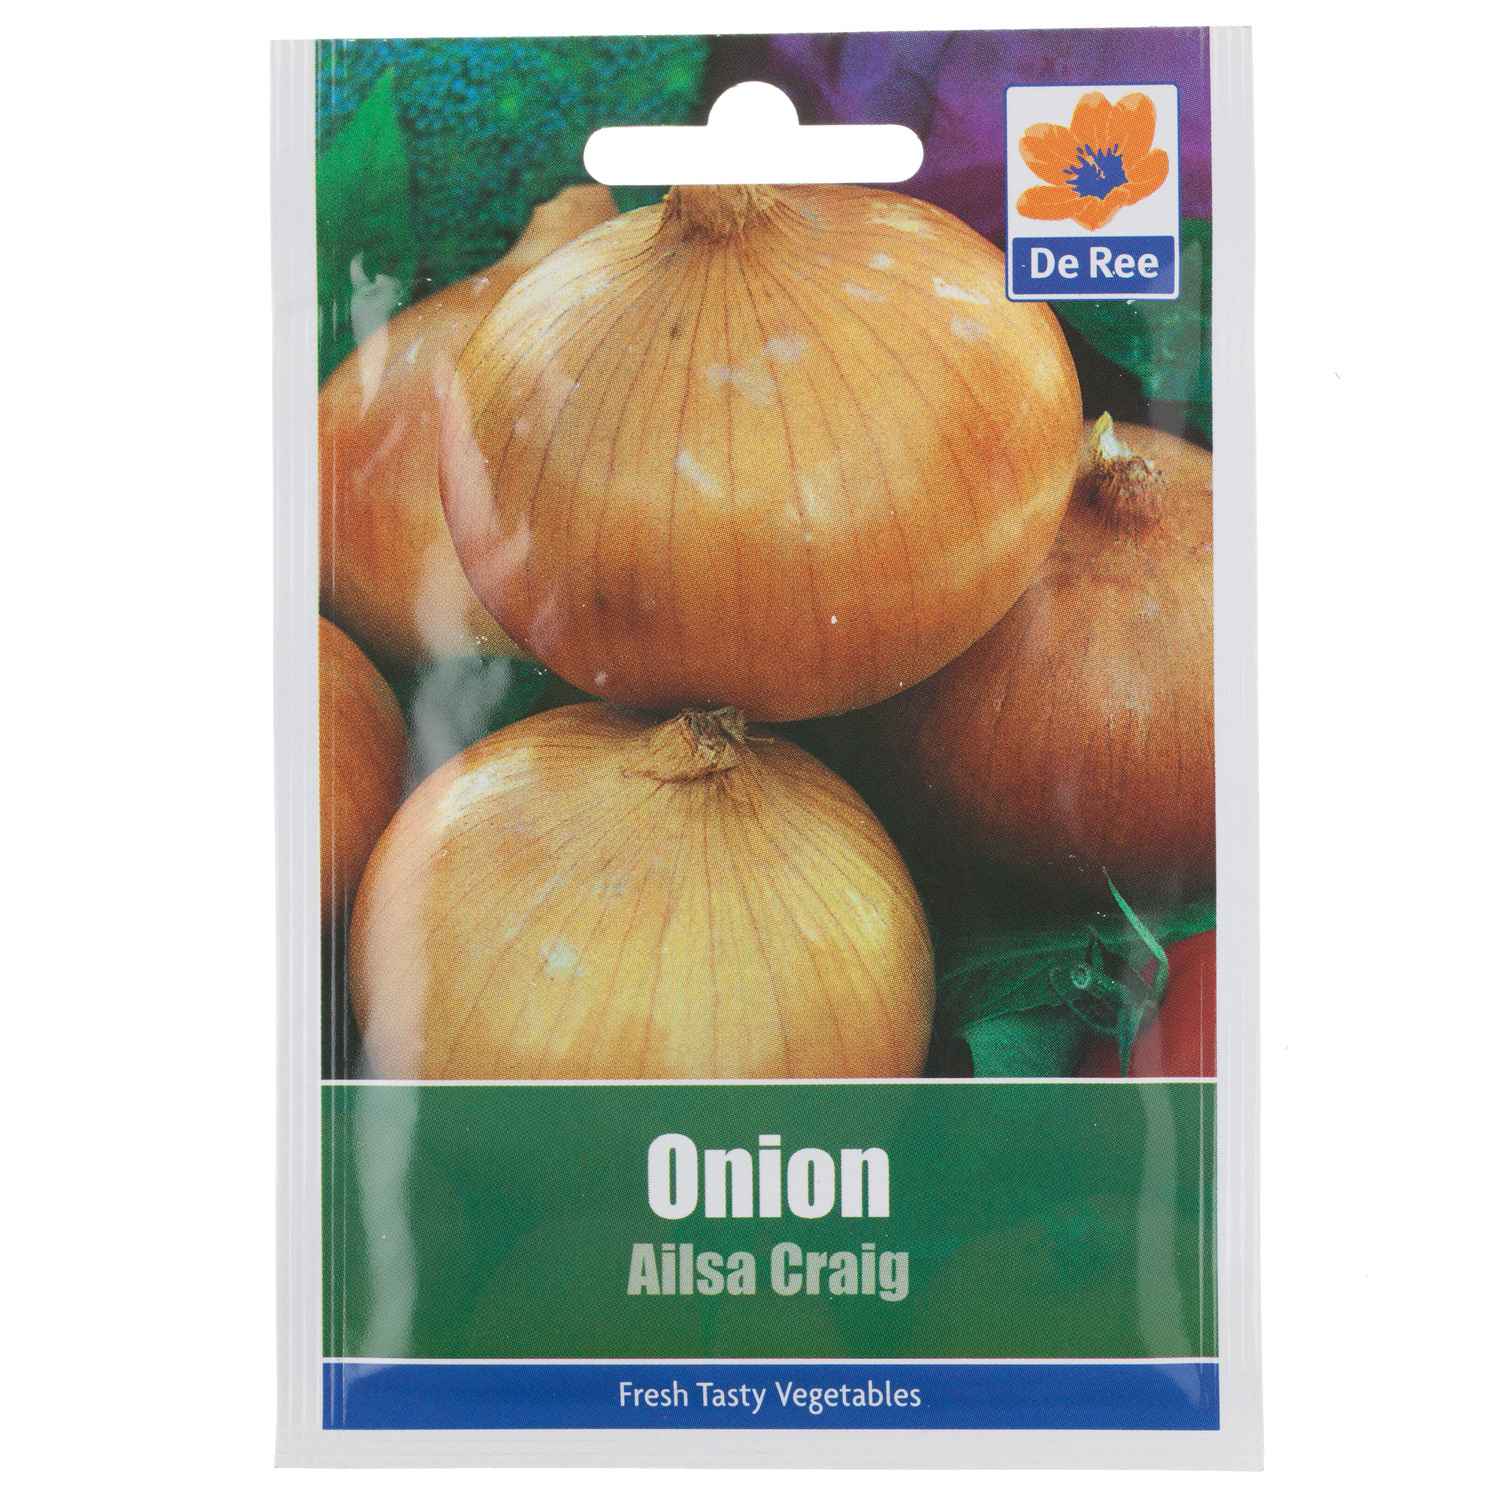 Onion Ailsa Craig Seed Packet Image